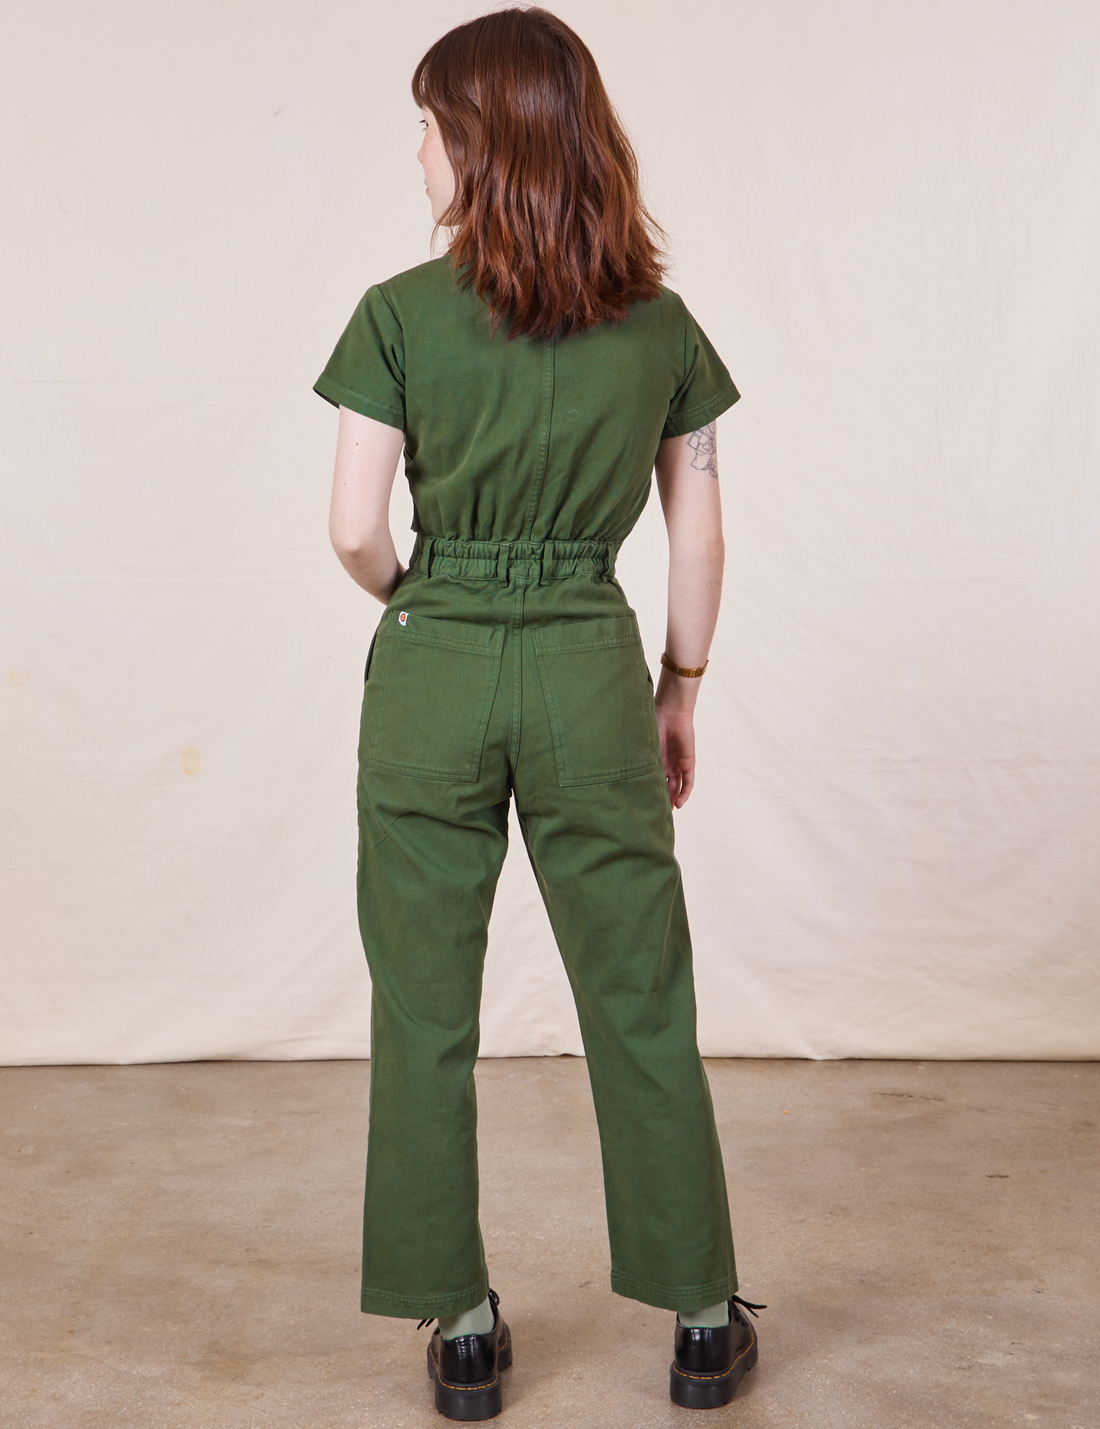 Petite Short Sleeve Jumpsuit in Dark Emerald Green back view on Hana